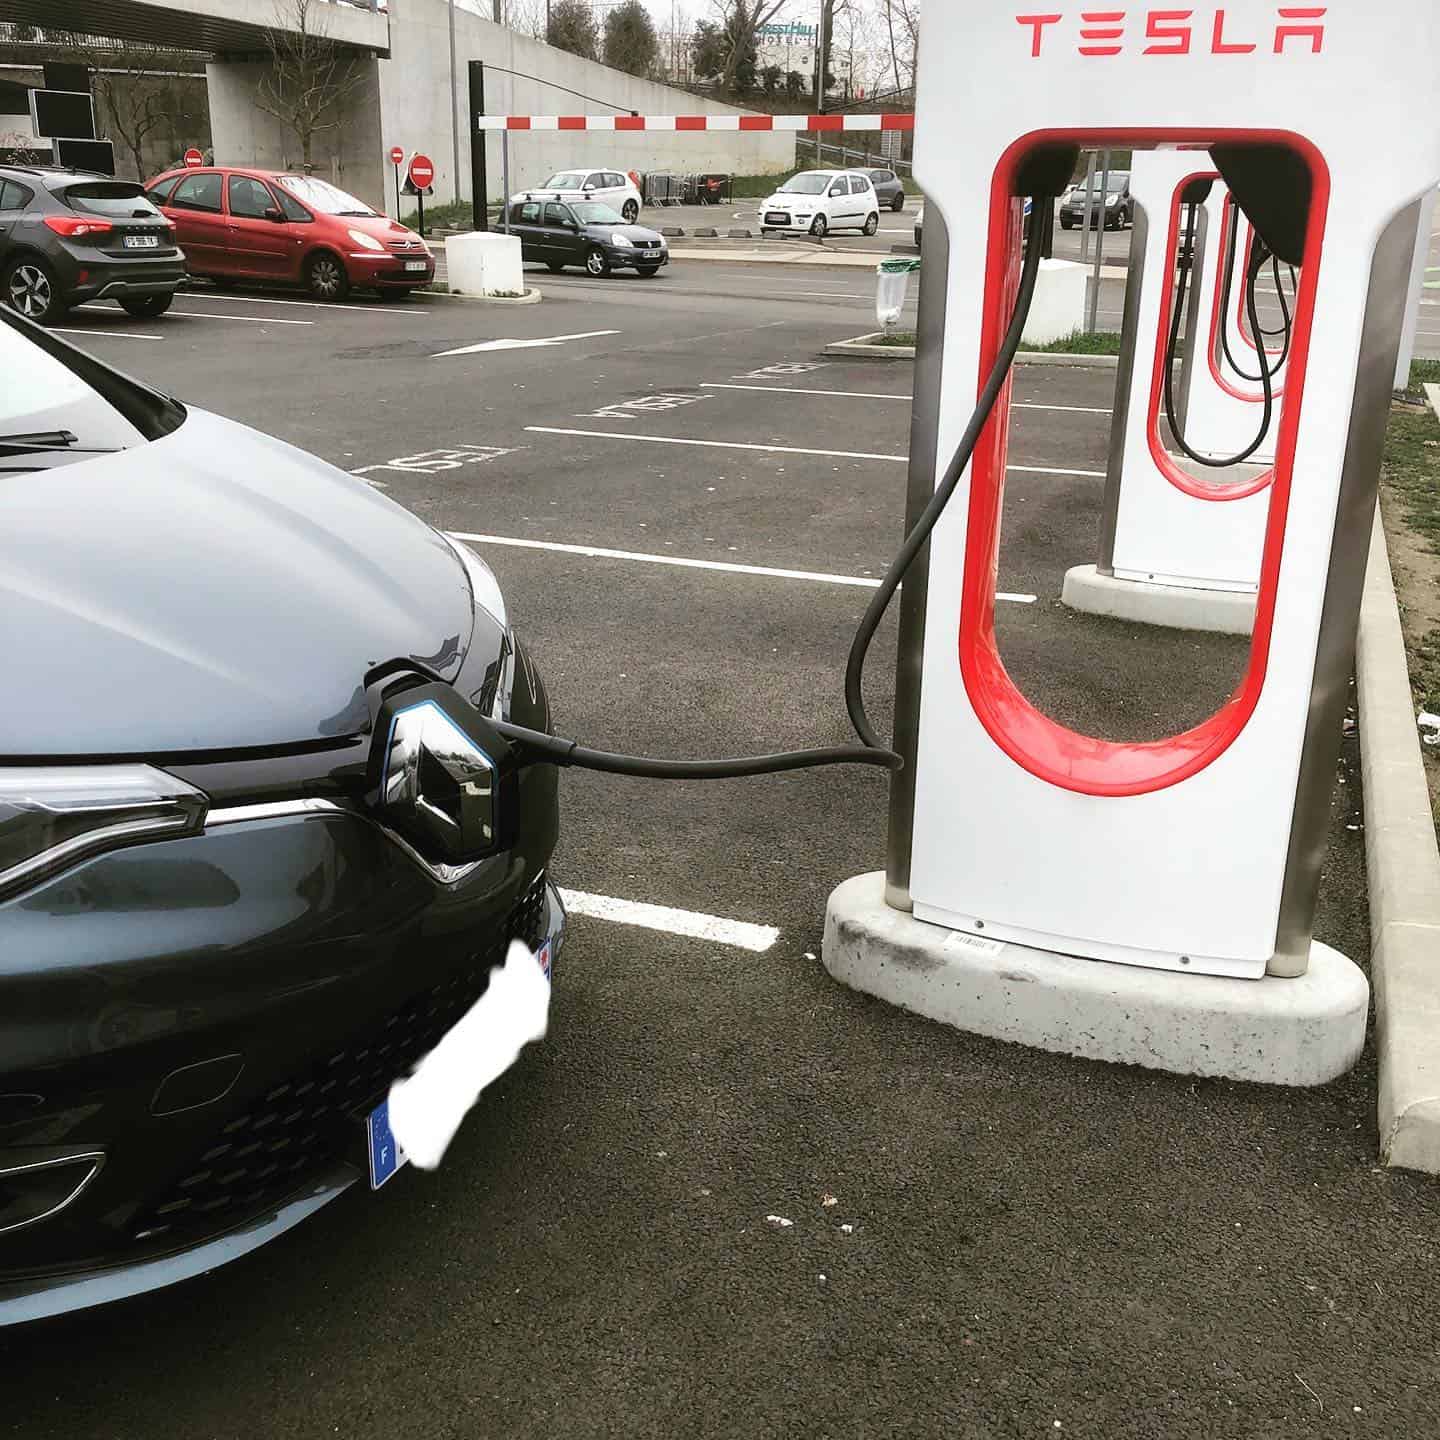 Supercharger : comment recharger ma non-Tesla ?